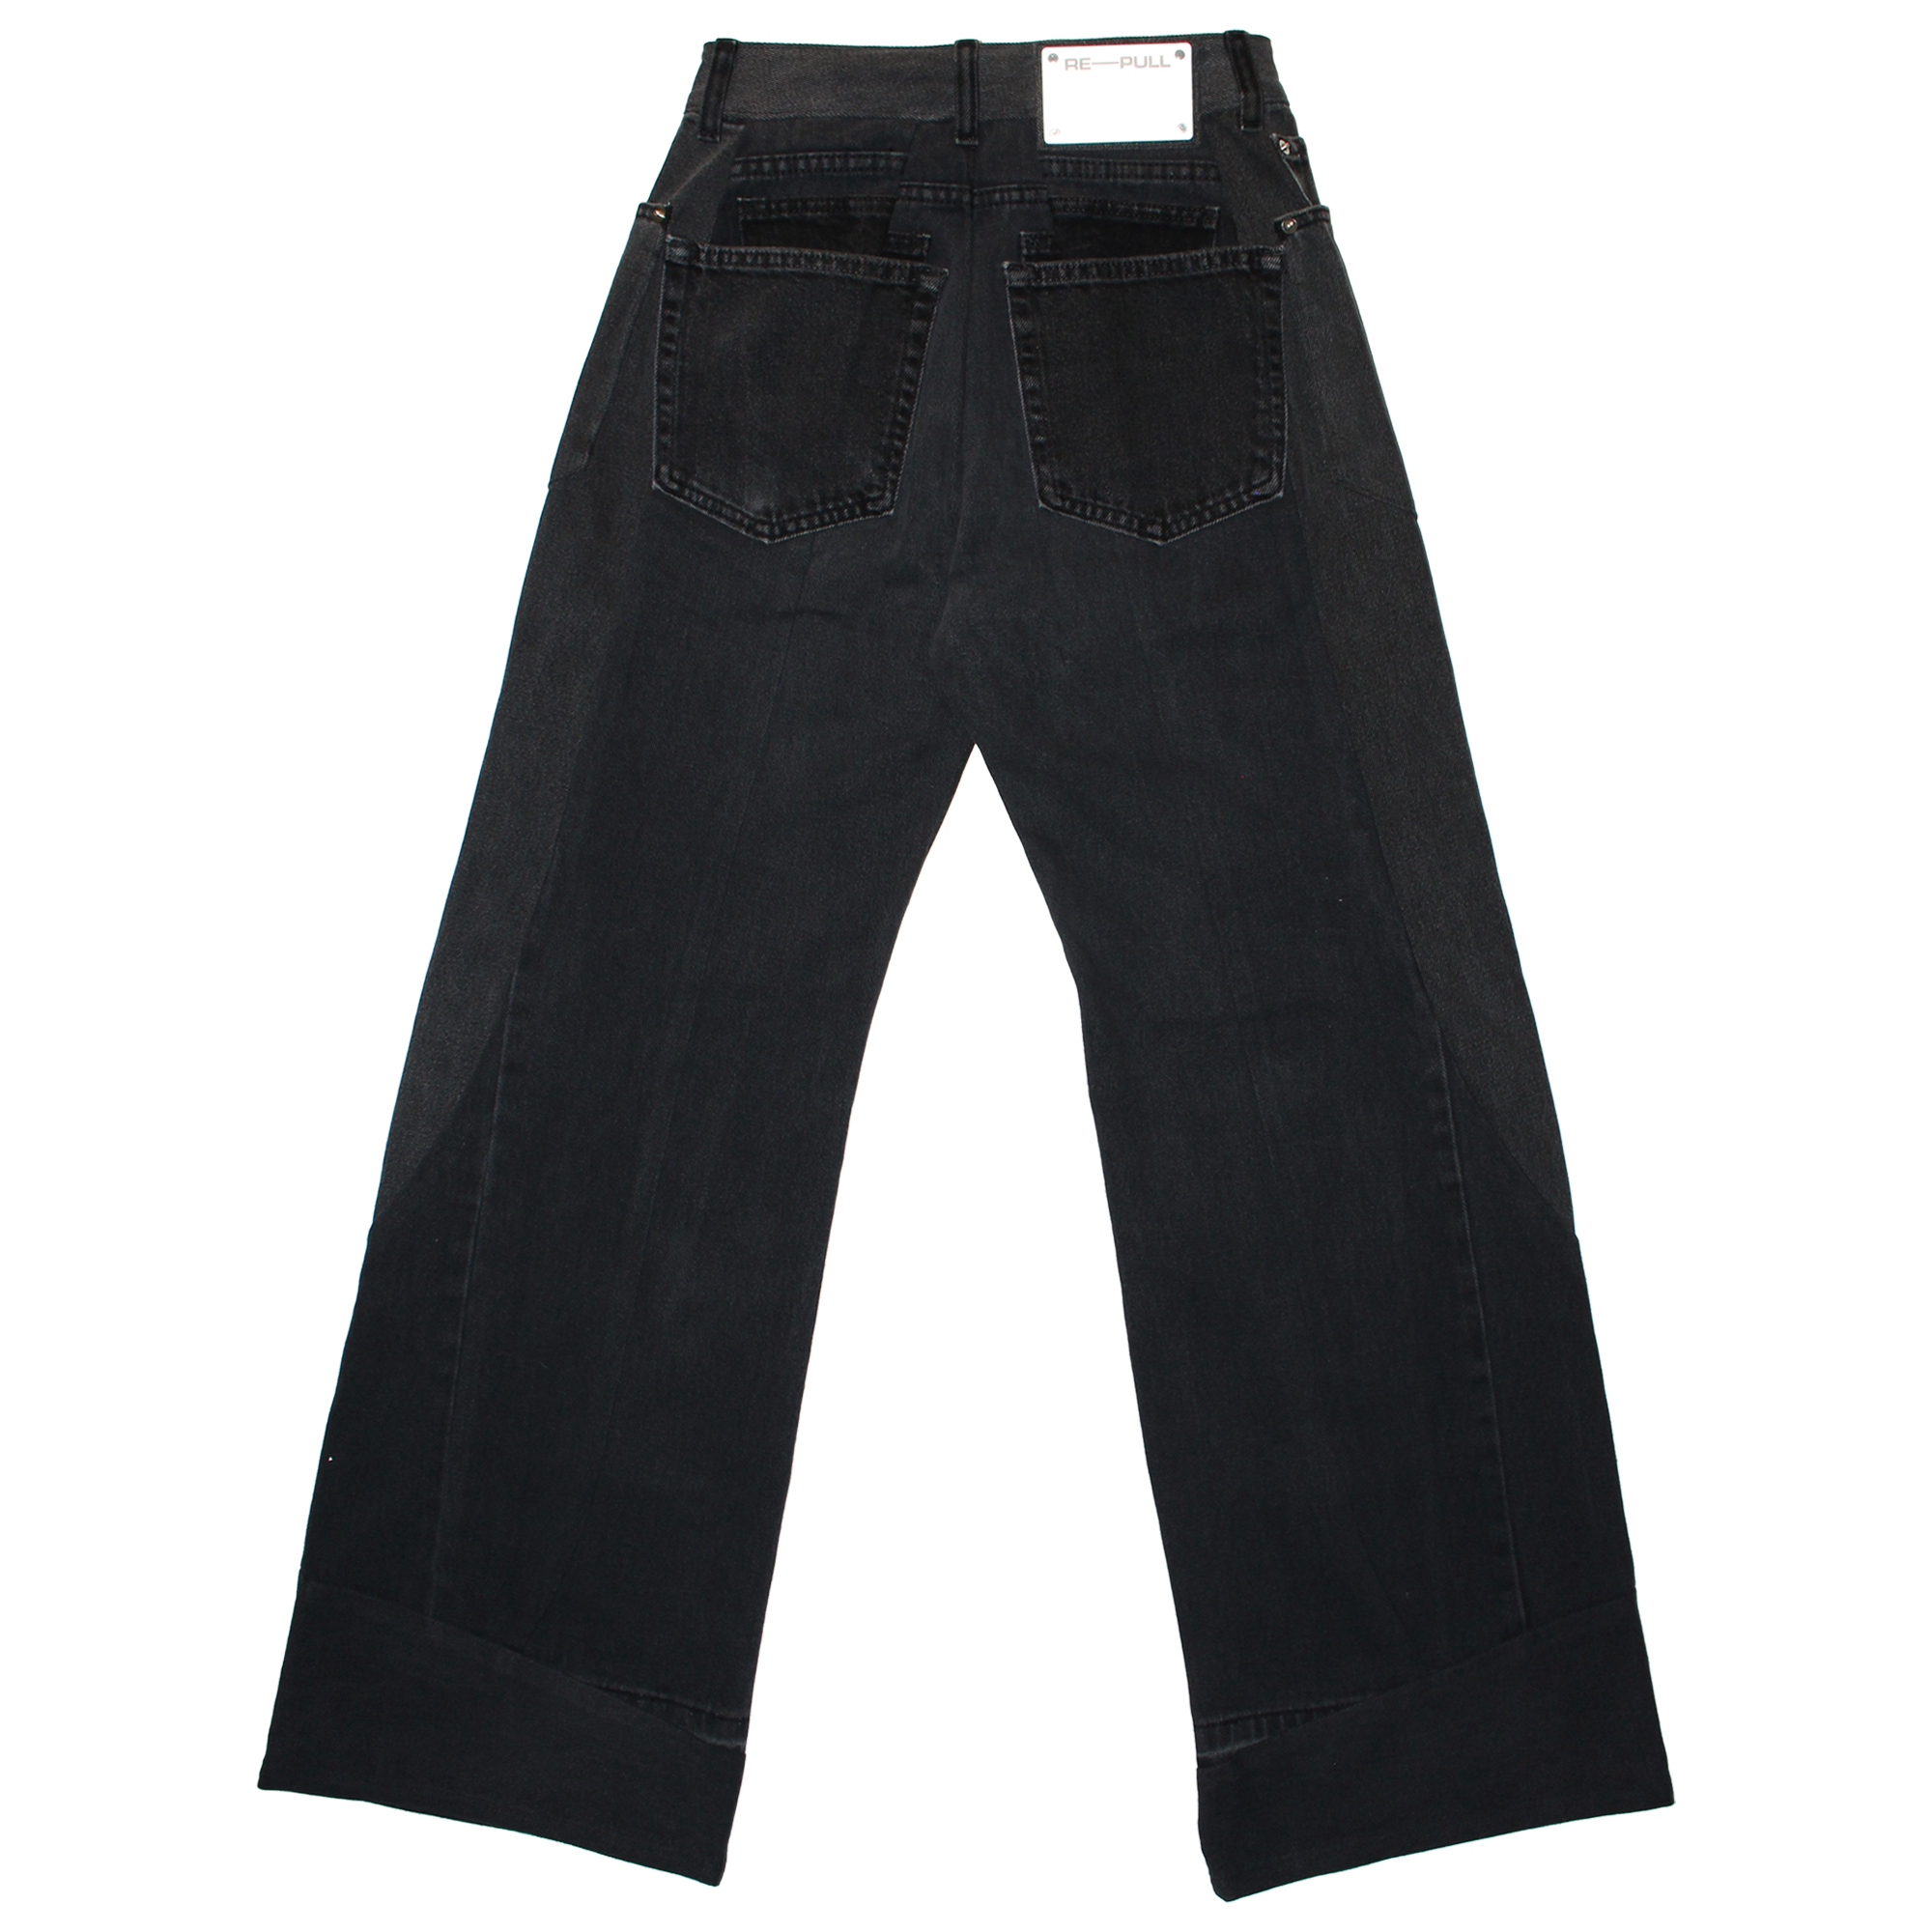 Kala Paneled Jean - Size 0